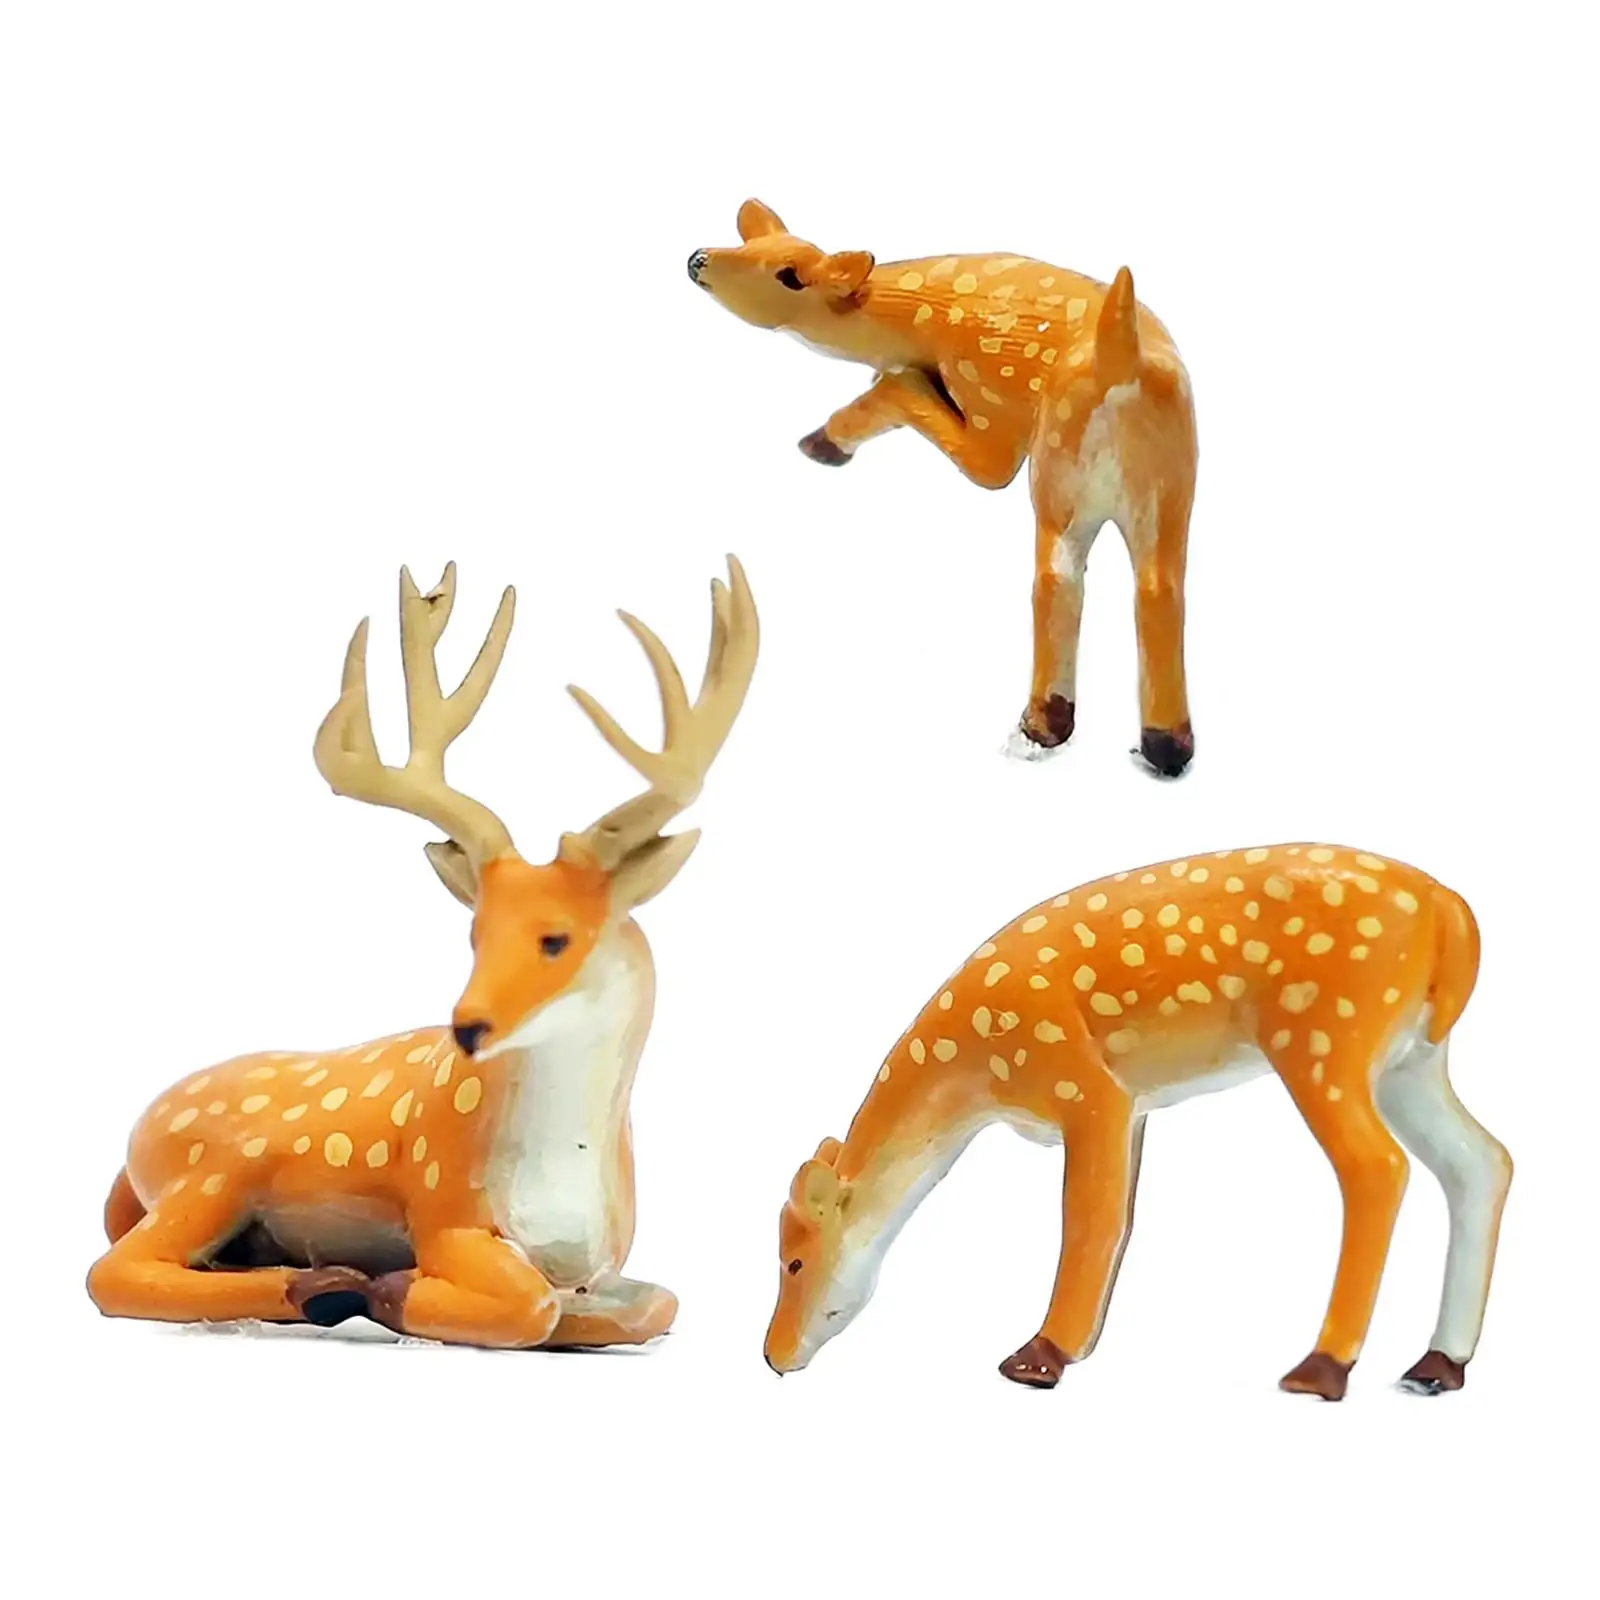 3x 1/64 Deer Figures Woodland Animal Deer Model Resin Statue Forest Animals Figures for Crafts DIY Scene Ornament Projects Decor